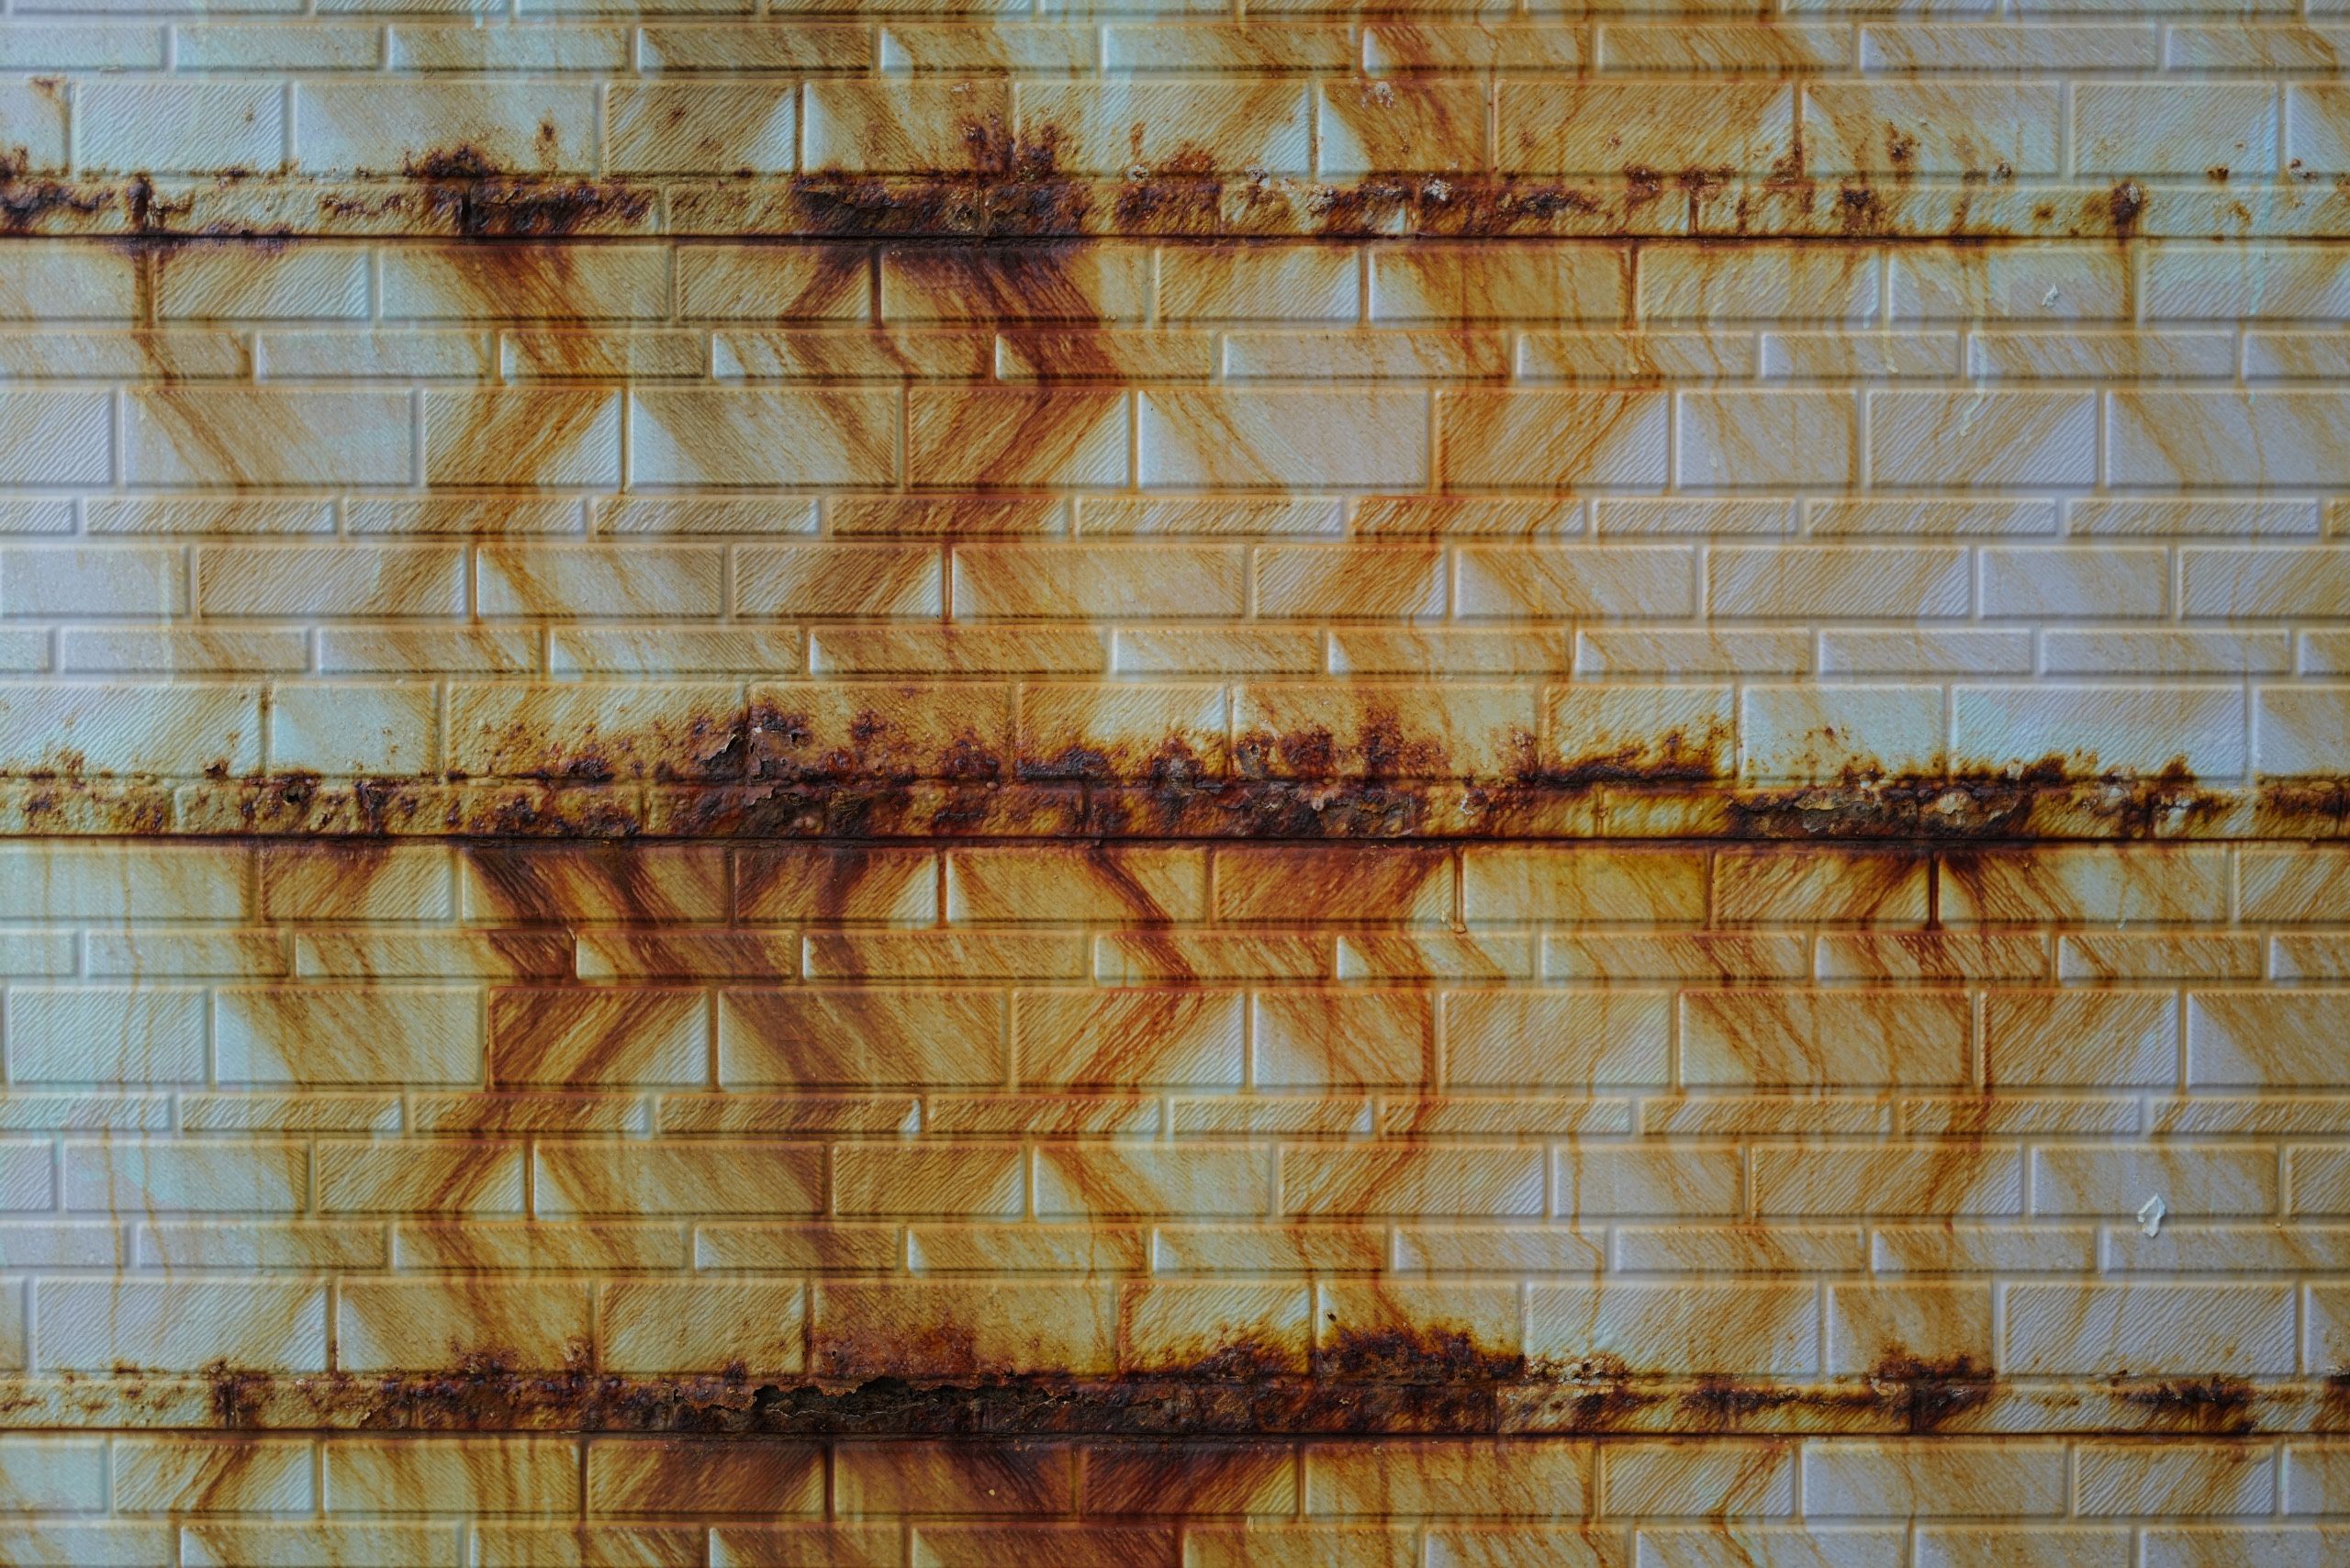 Rust streaks down the side of a building in wavy patterns